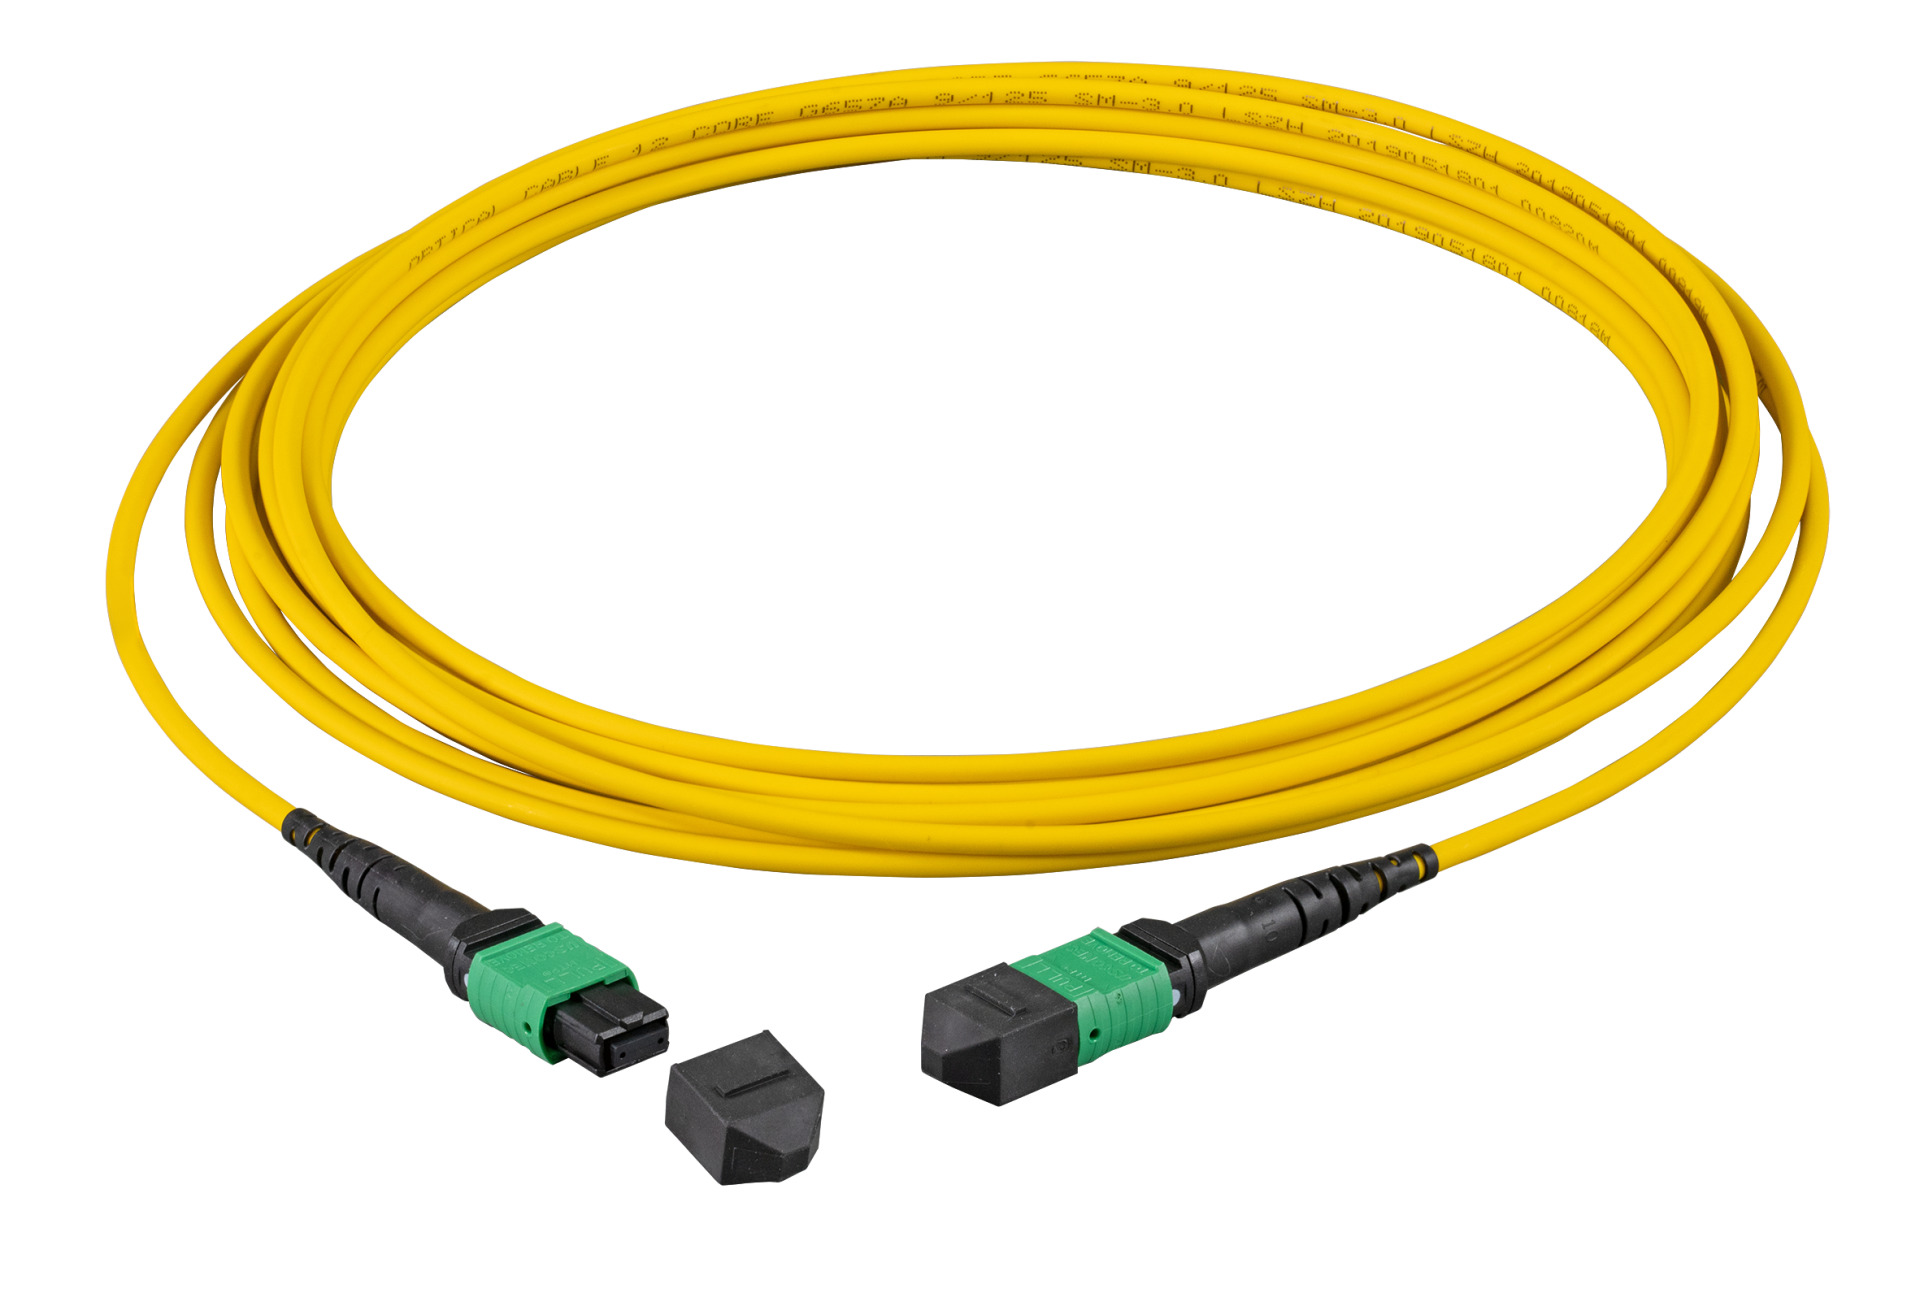 MTP®-F/MTP®-F 12-fiber matrix patch cable OS2, LSZH yellow, Code B, 5m